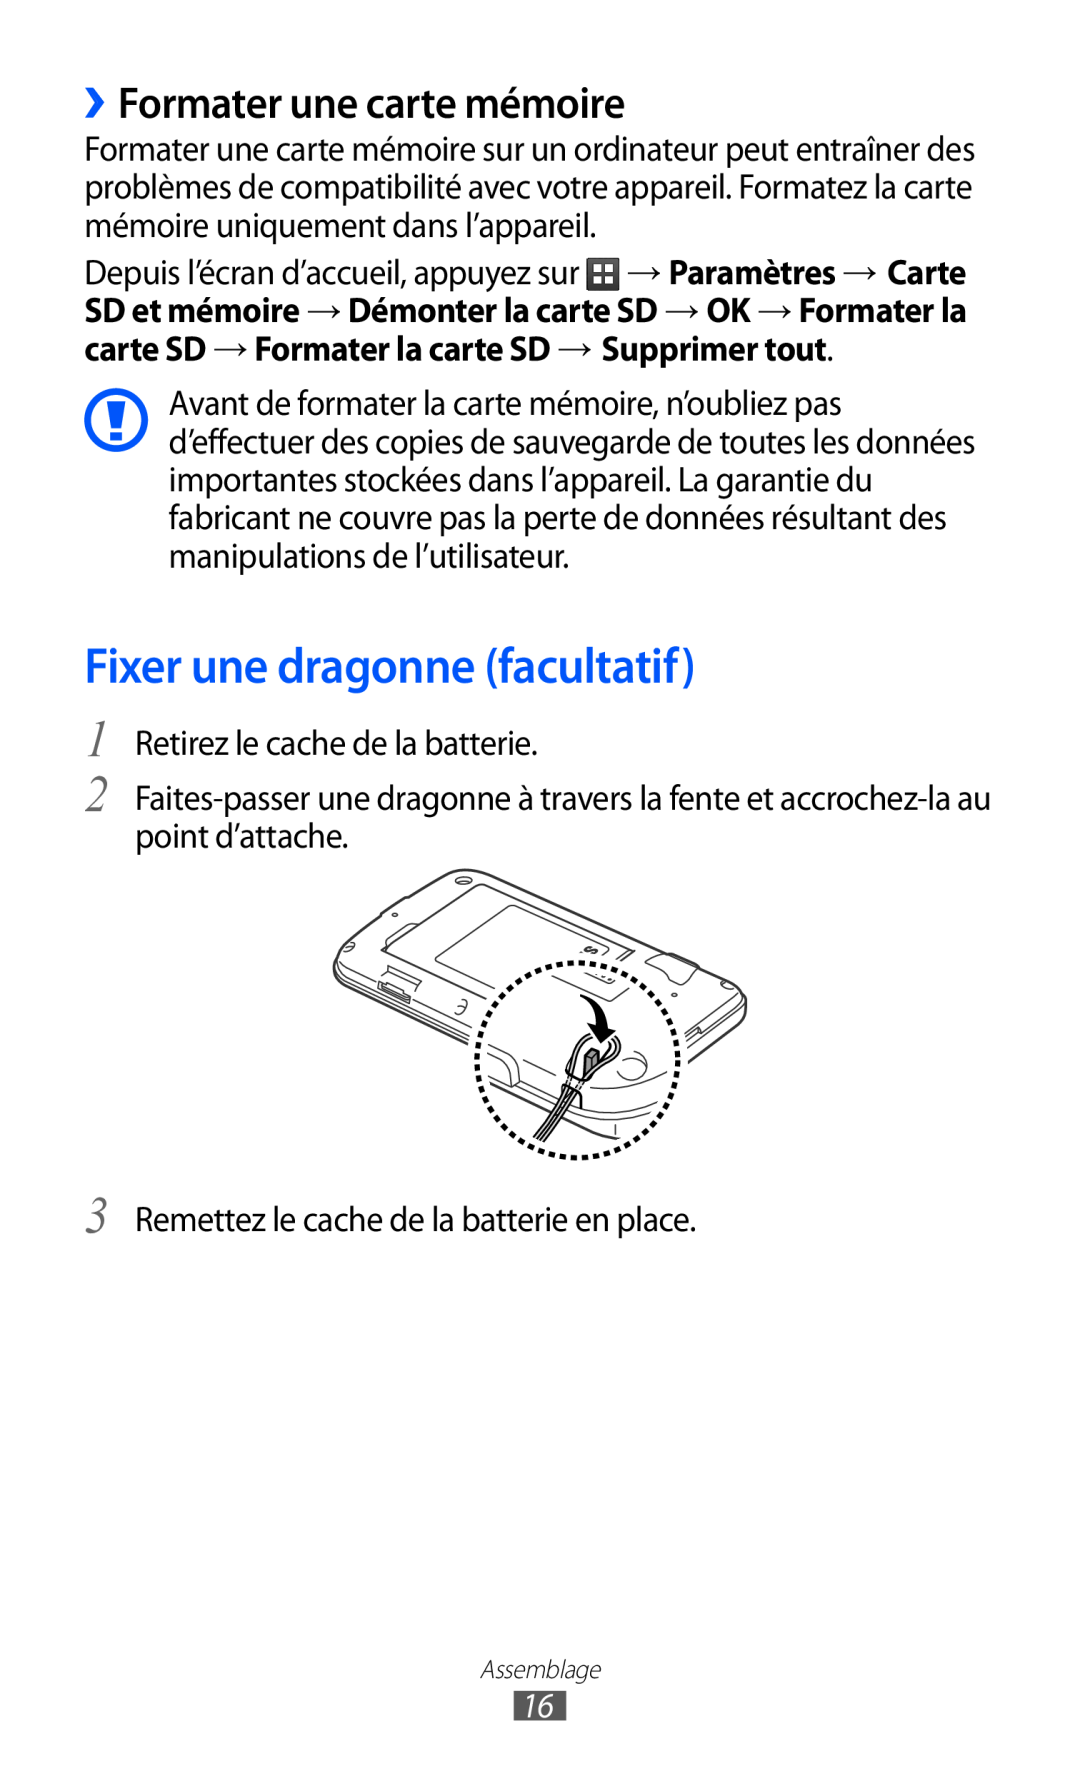 Samsung GT-B5510WSAFTM, GT-B5510CAANRJ, GT-B5510CAAXEF manual Fixer une dragonne facultatif, ››Formater une carte mémoire 